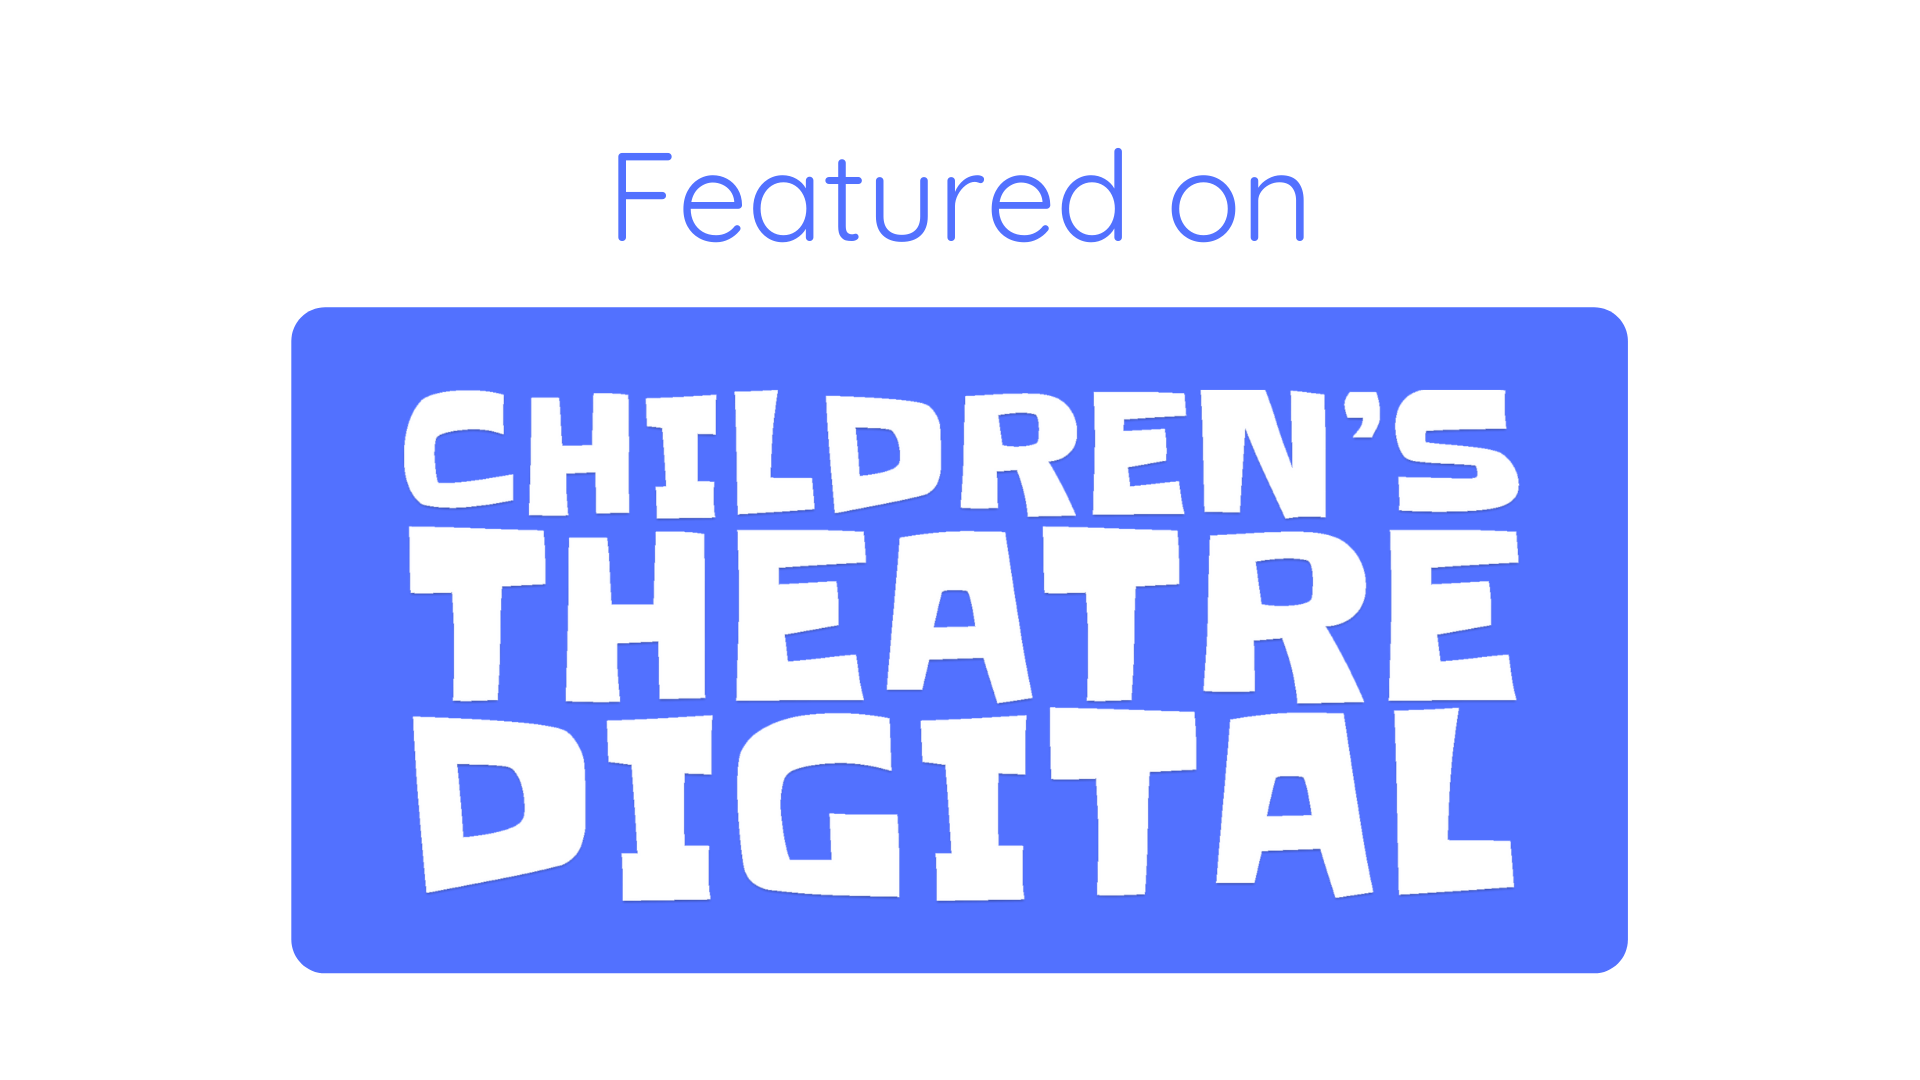 Children's Theatre Digital